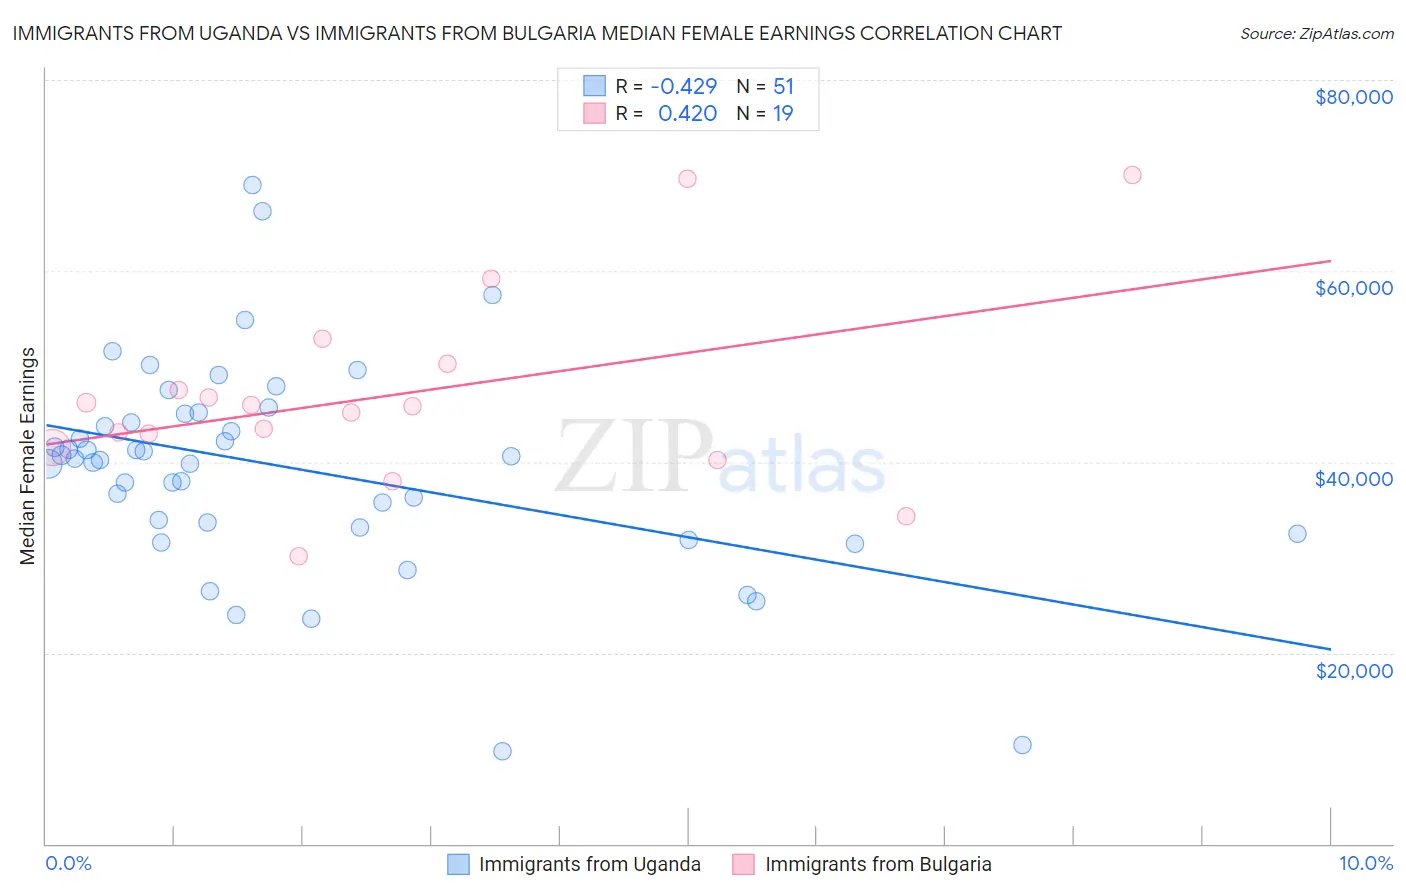 Immigrants from Uganda vs Immigrants from Bulgaria Median Female Earnings